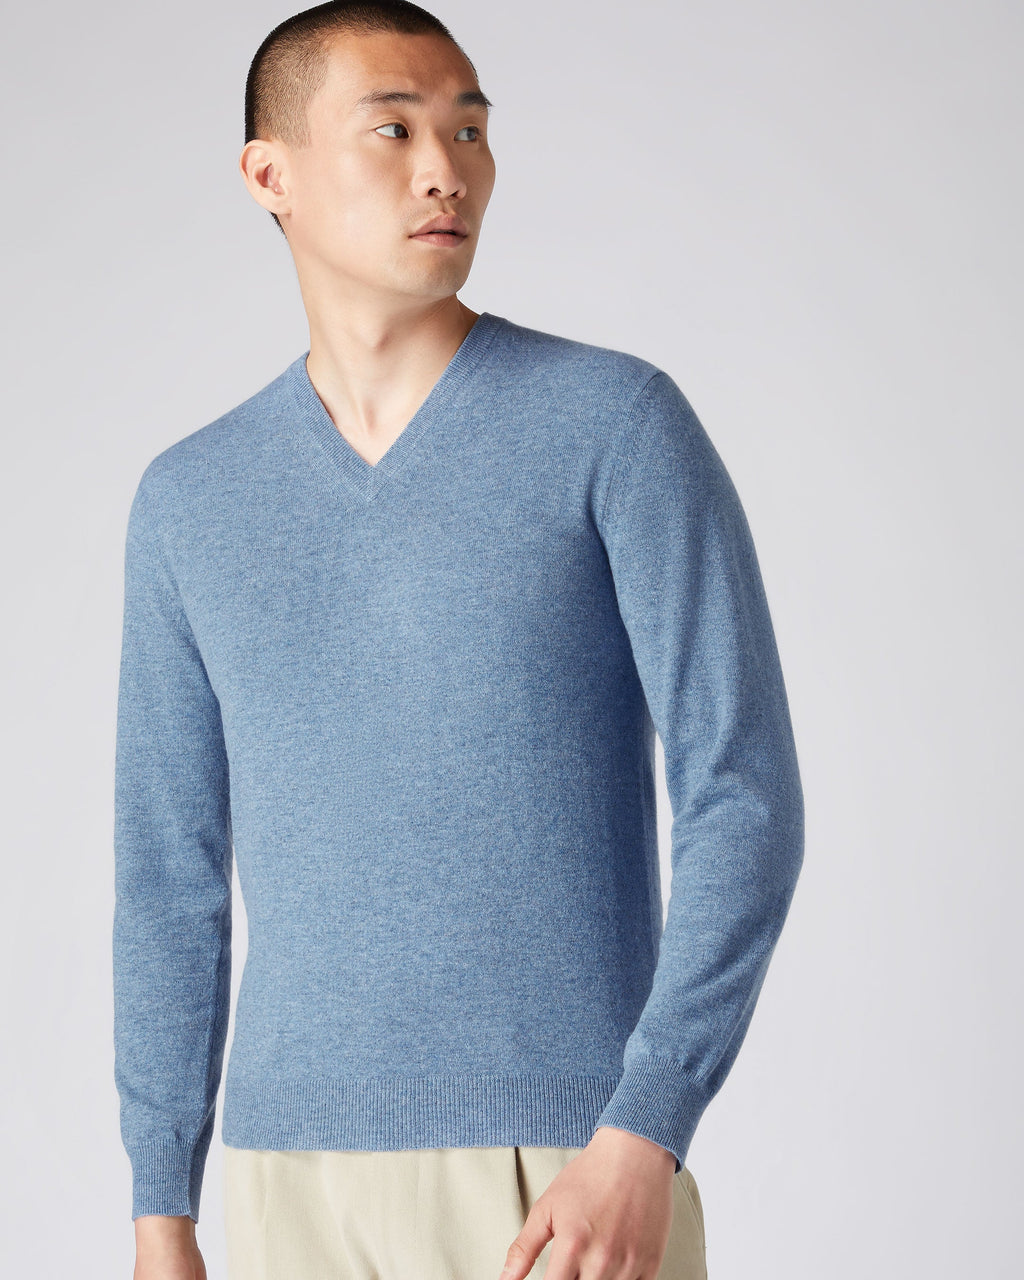 Brown Men's 100% Cashmere Long Sleeve Pullover V Neck Sweater